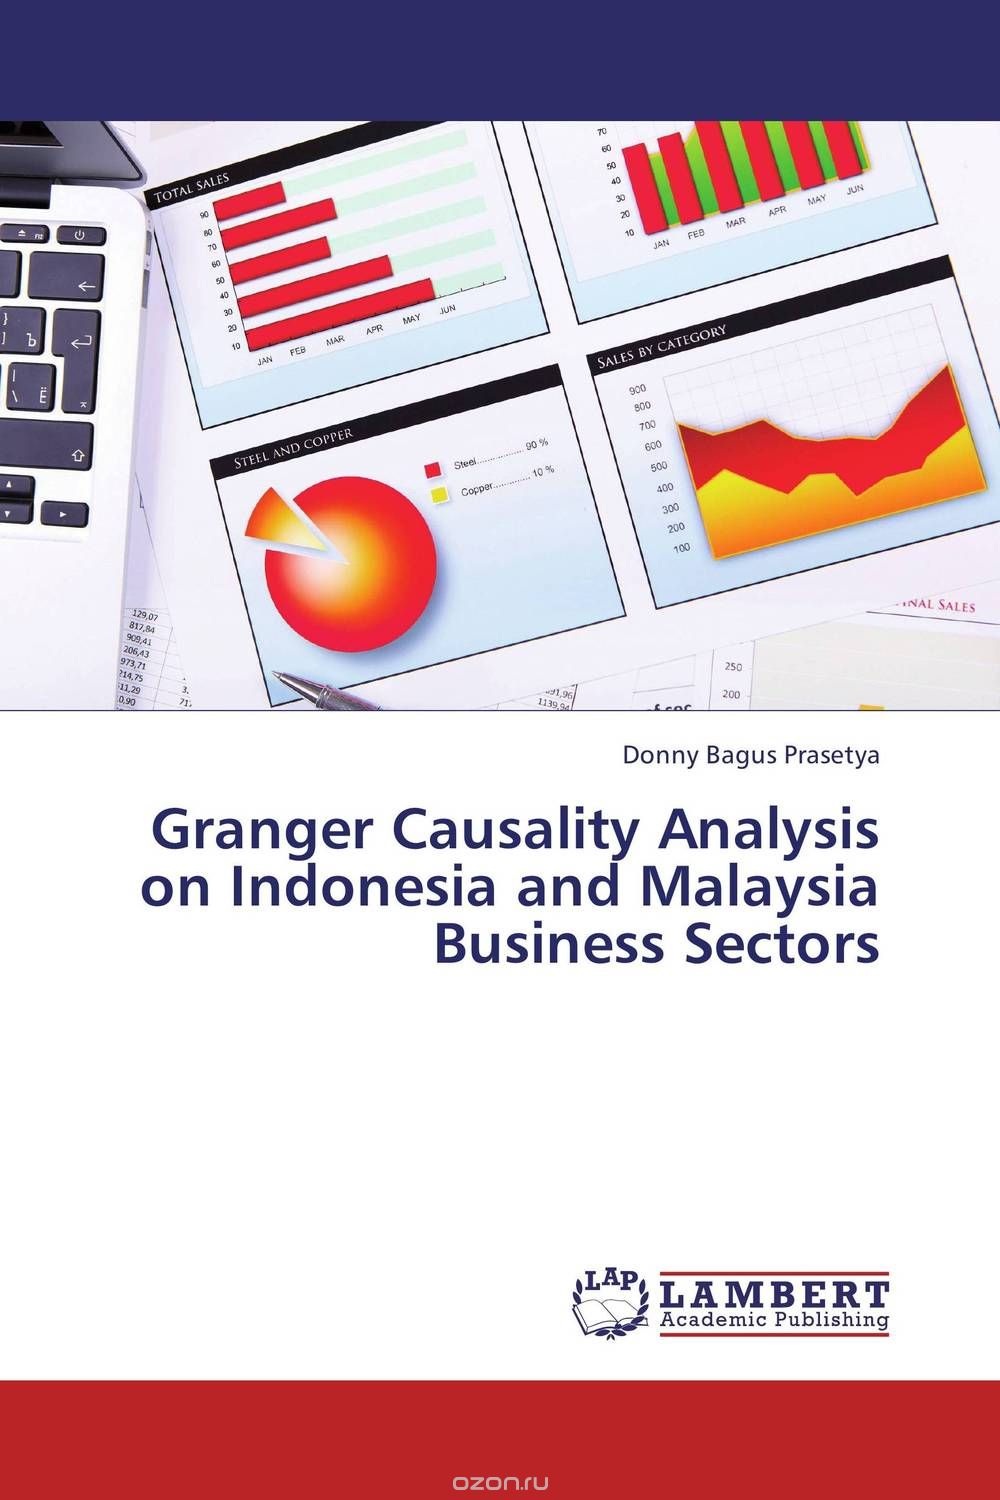 Скачать книгу "Granger Causality Analysis on Indonesia and Malaysia Business Sectors"